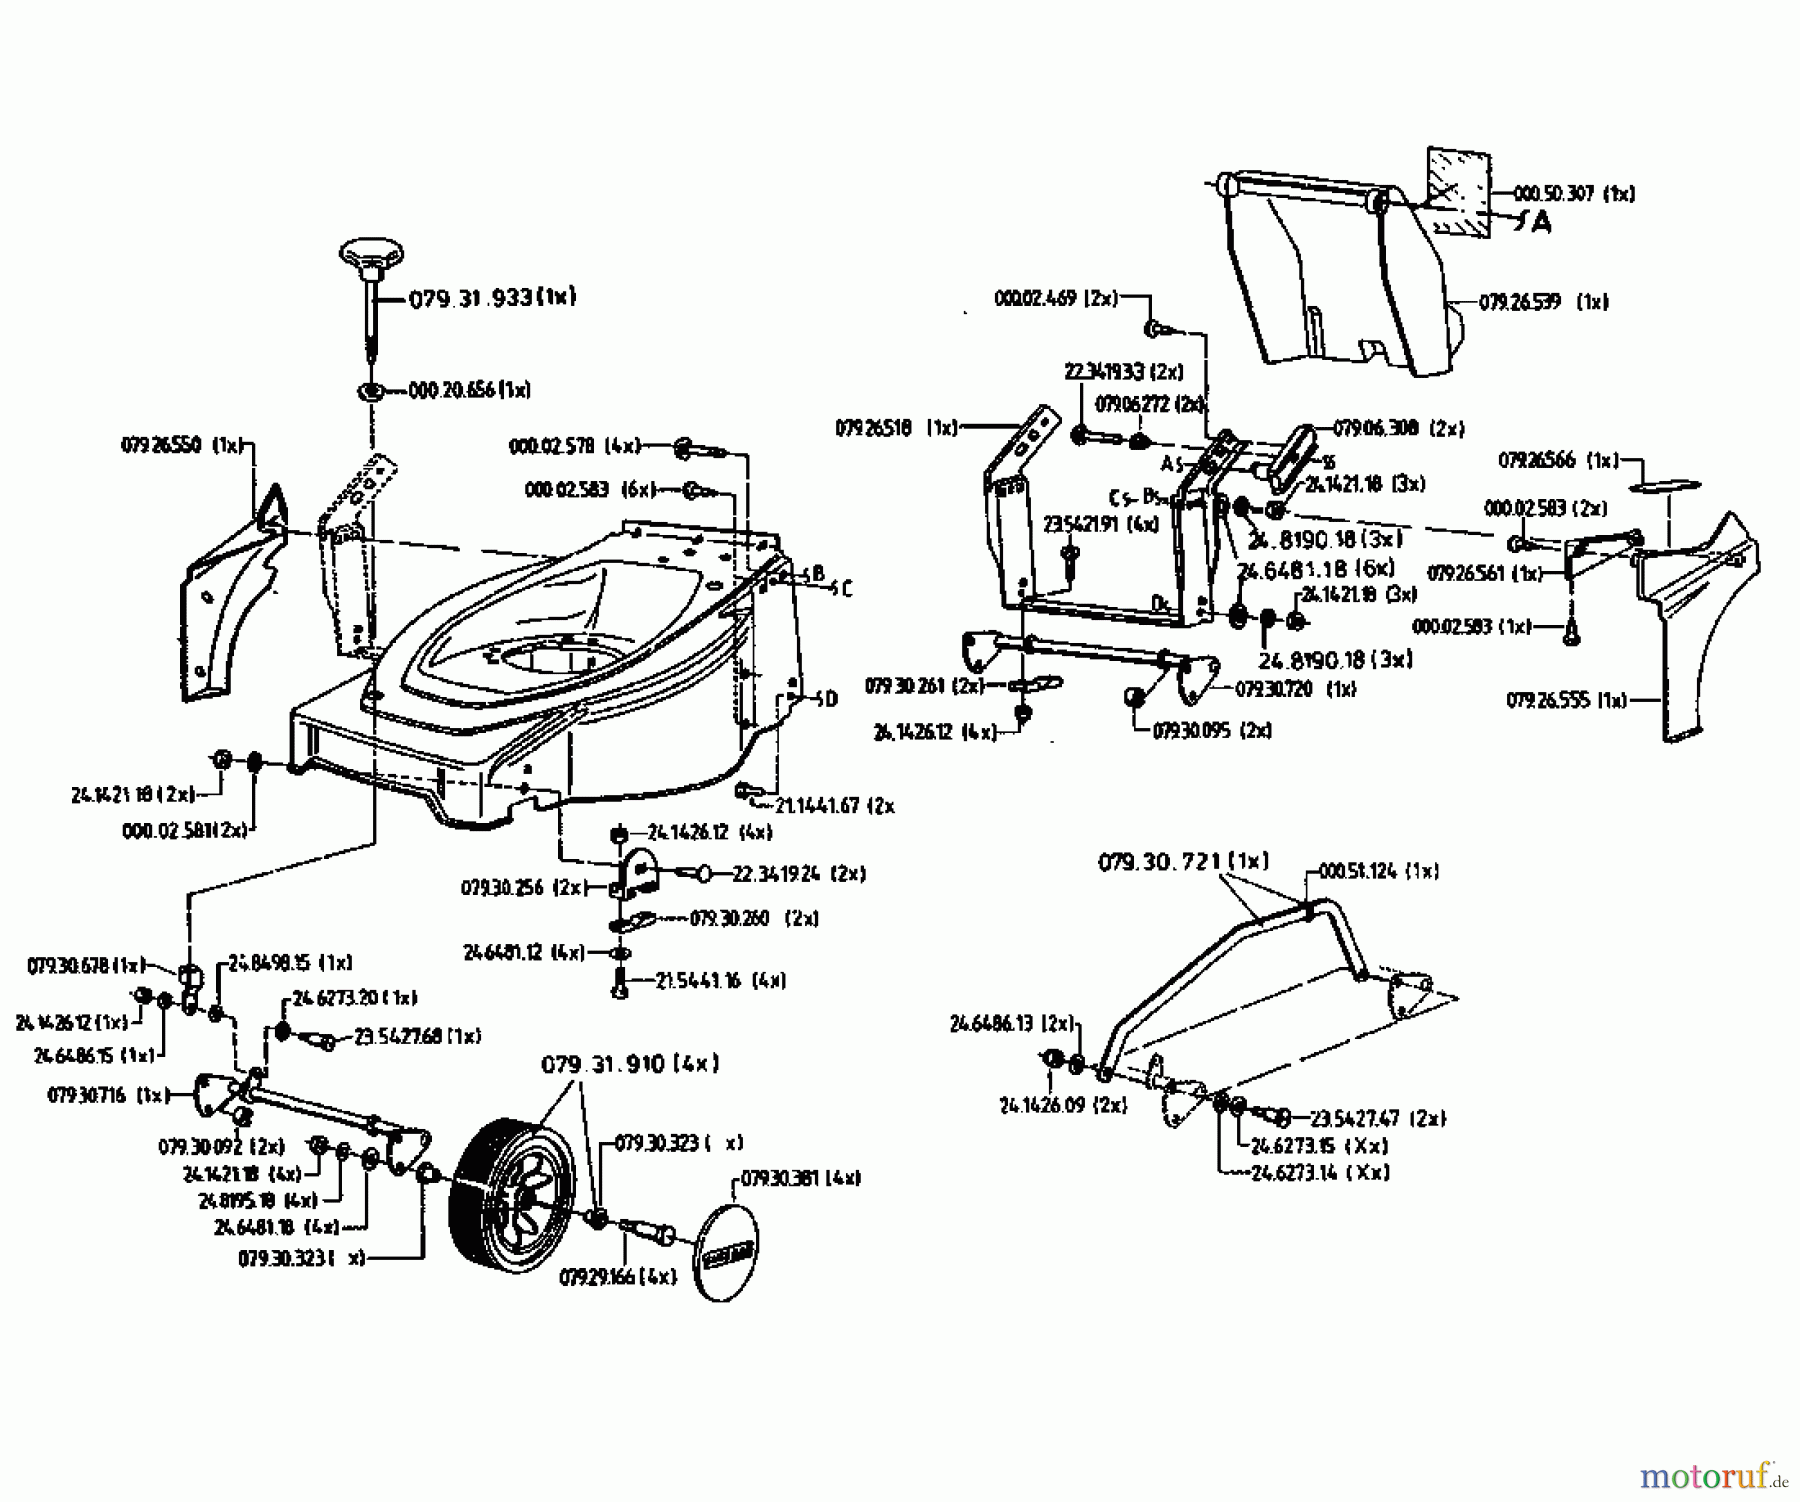  Gutbrod Petrol mower HB 42 LE 04028.03  (1996) Basic machine